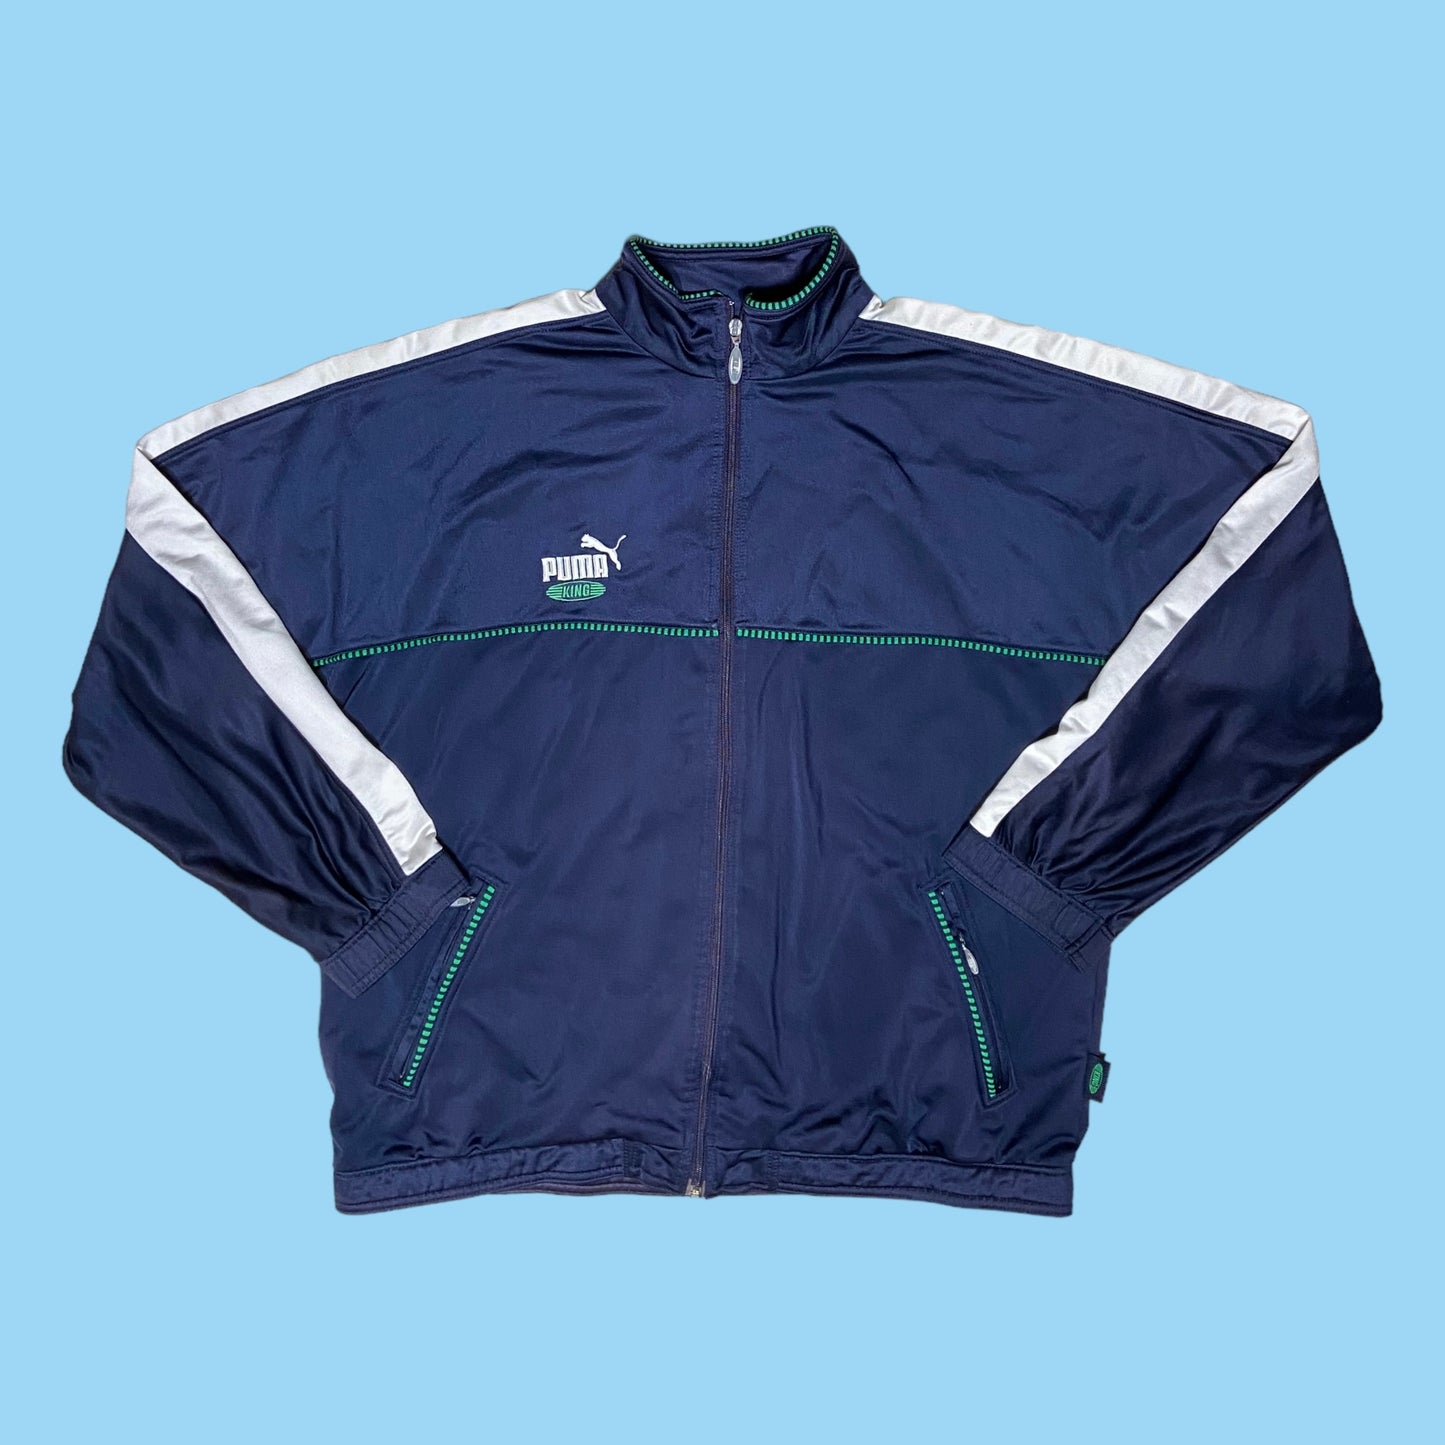 Vintage Puma King track jacket - XL